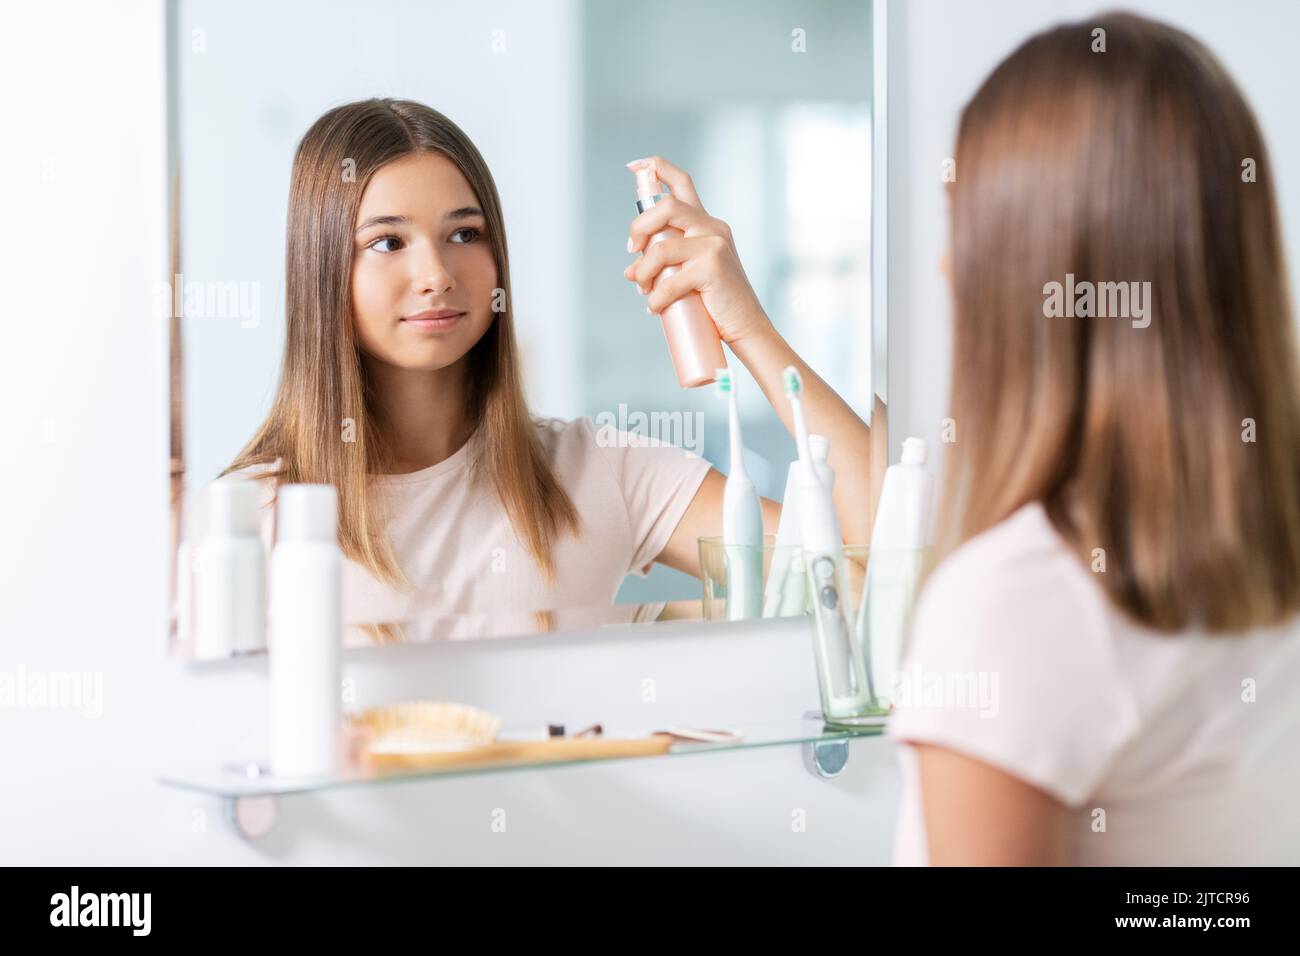 teenage girl using hair styling spray at bathroom Stock Photo